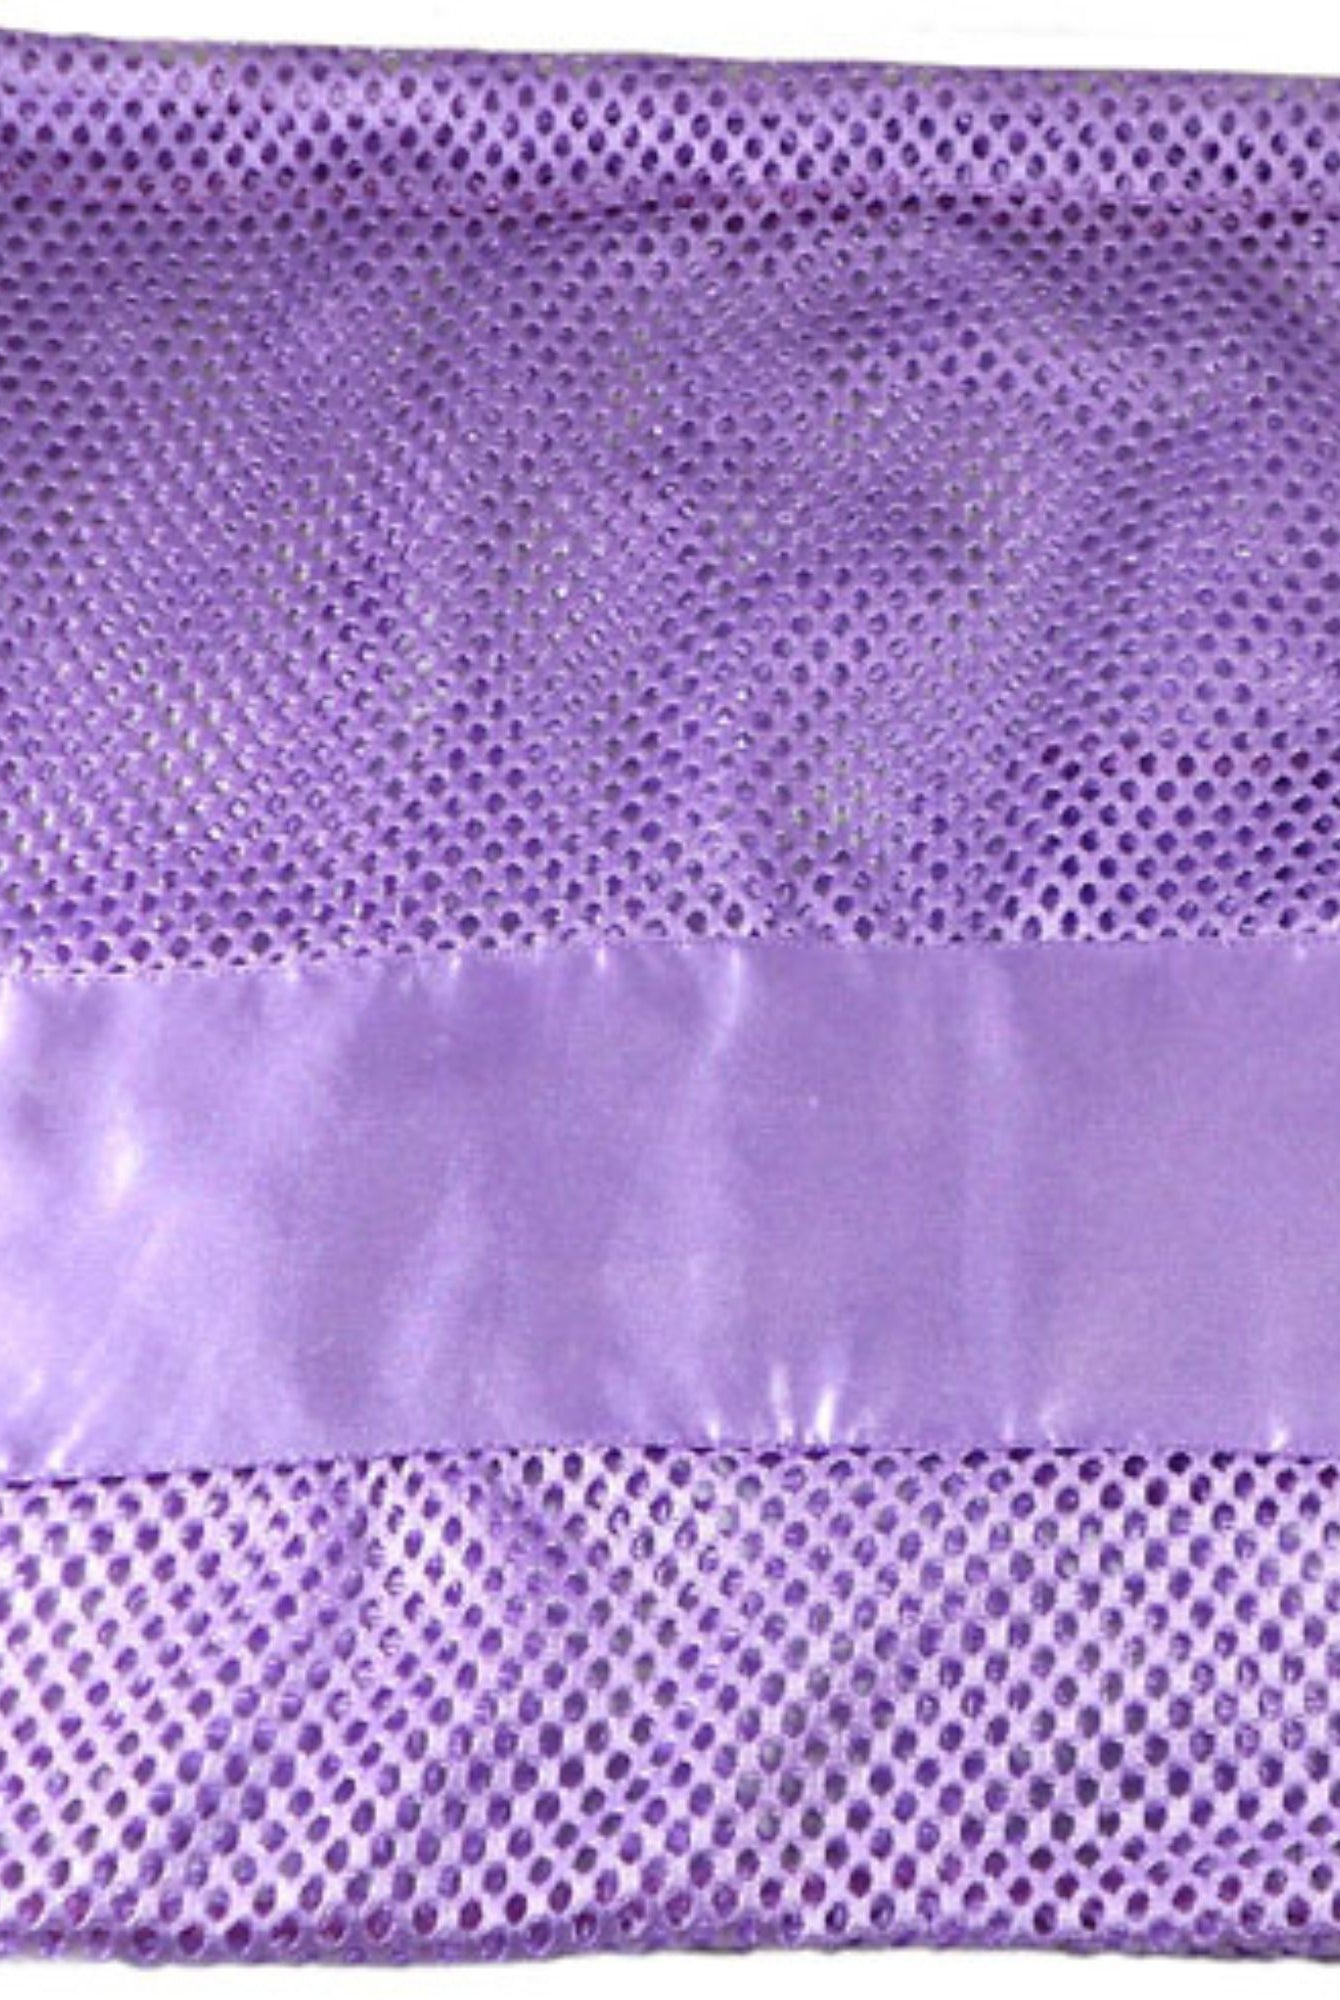 Large Nylon Mesh drawstring Pointe Bag Pillowcase Lavender